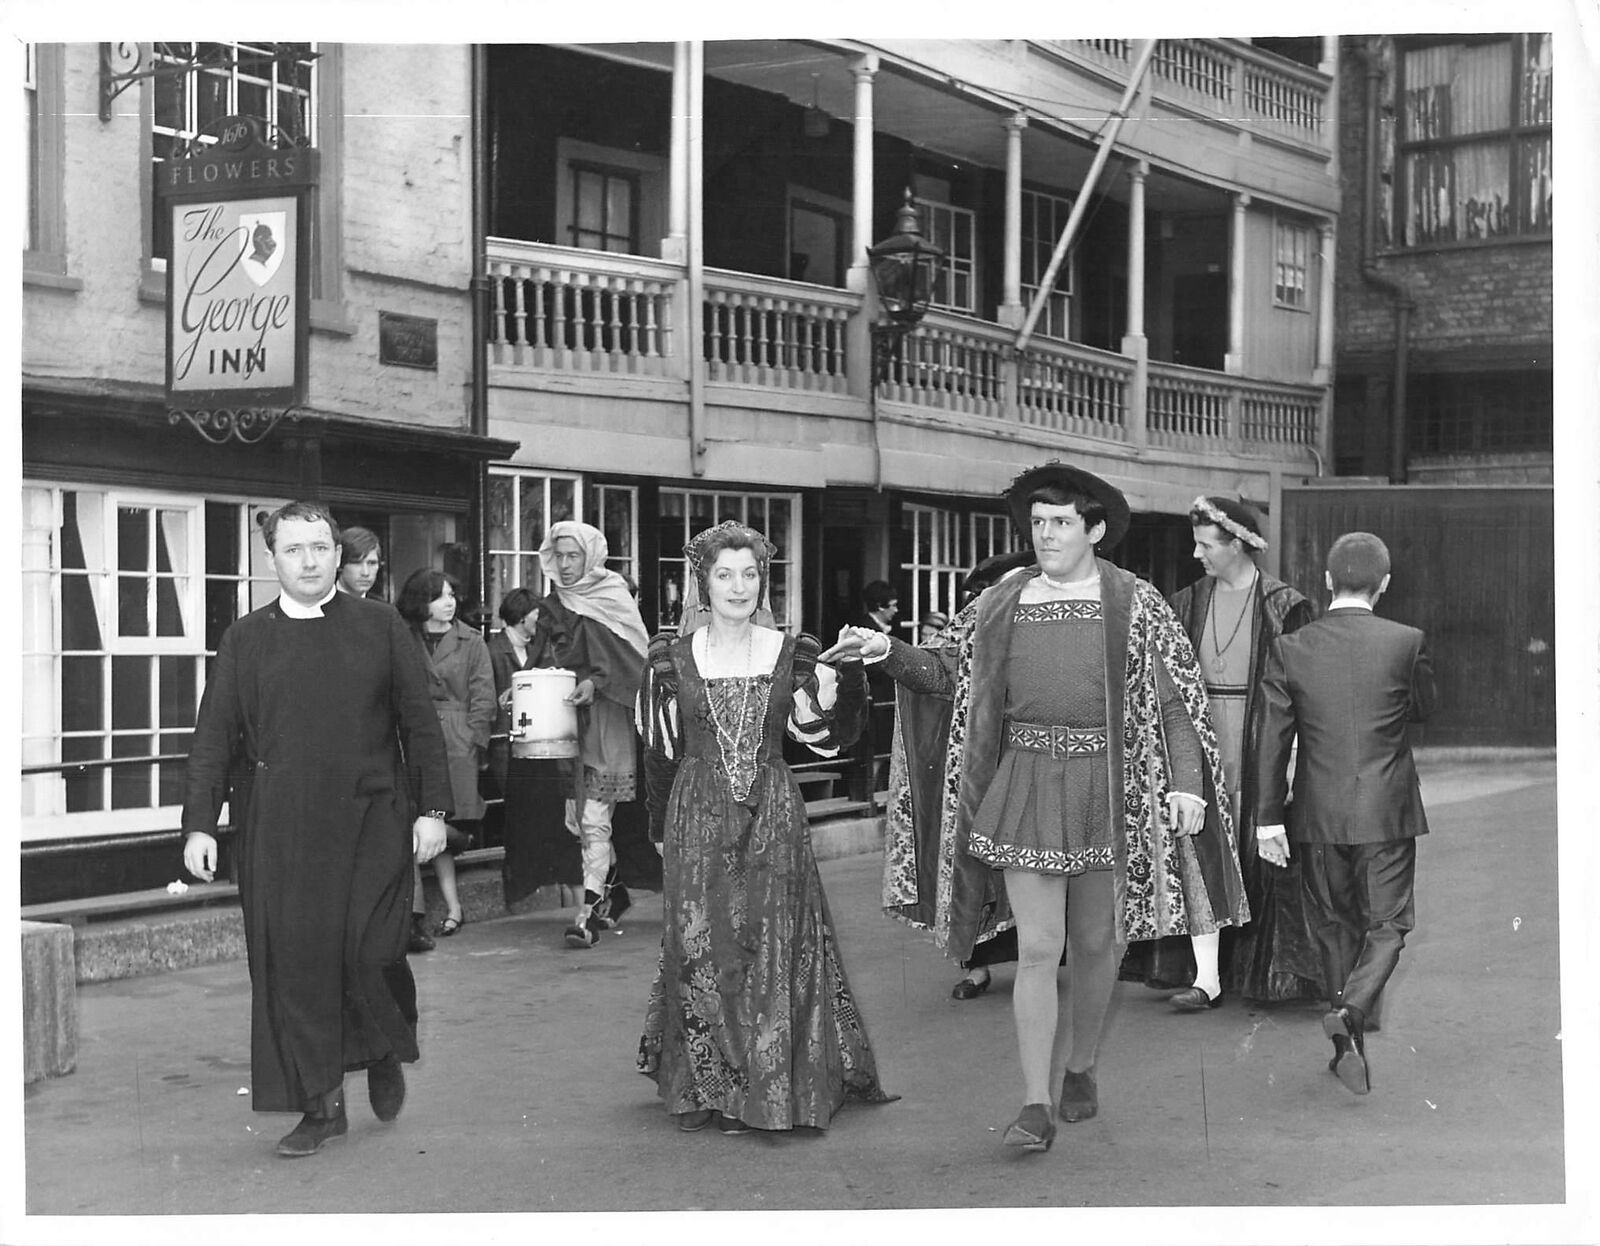 1966 Press Photo MERCHANT OF VENICE Drama Group George Inn performance festival